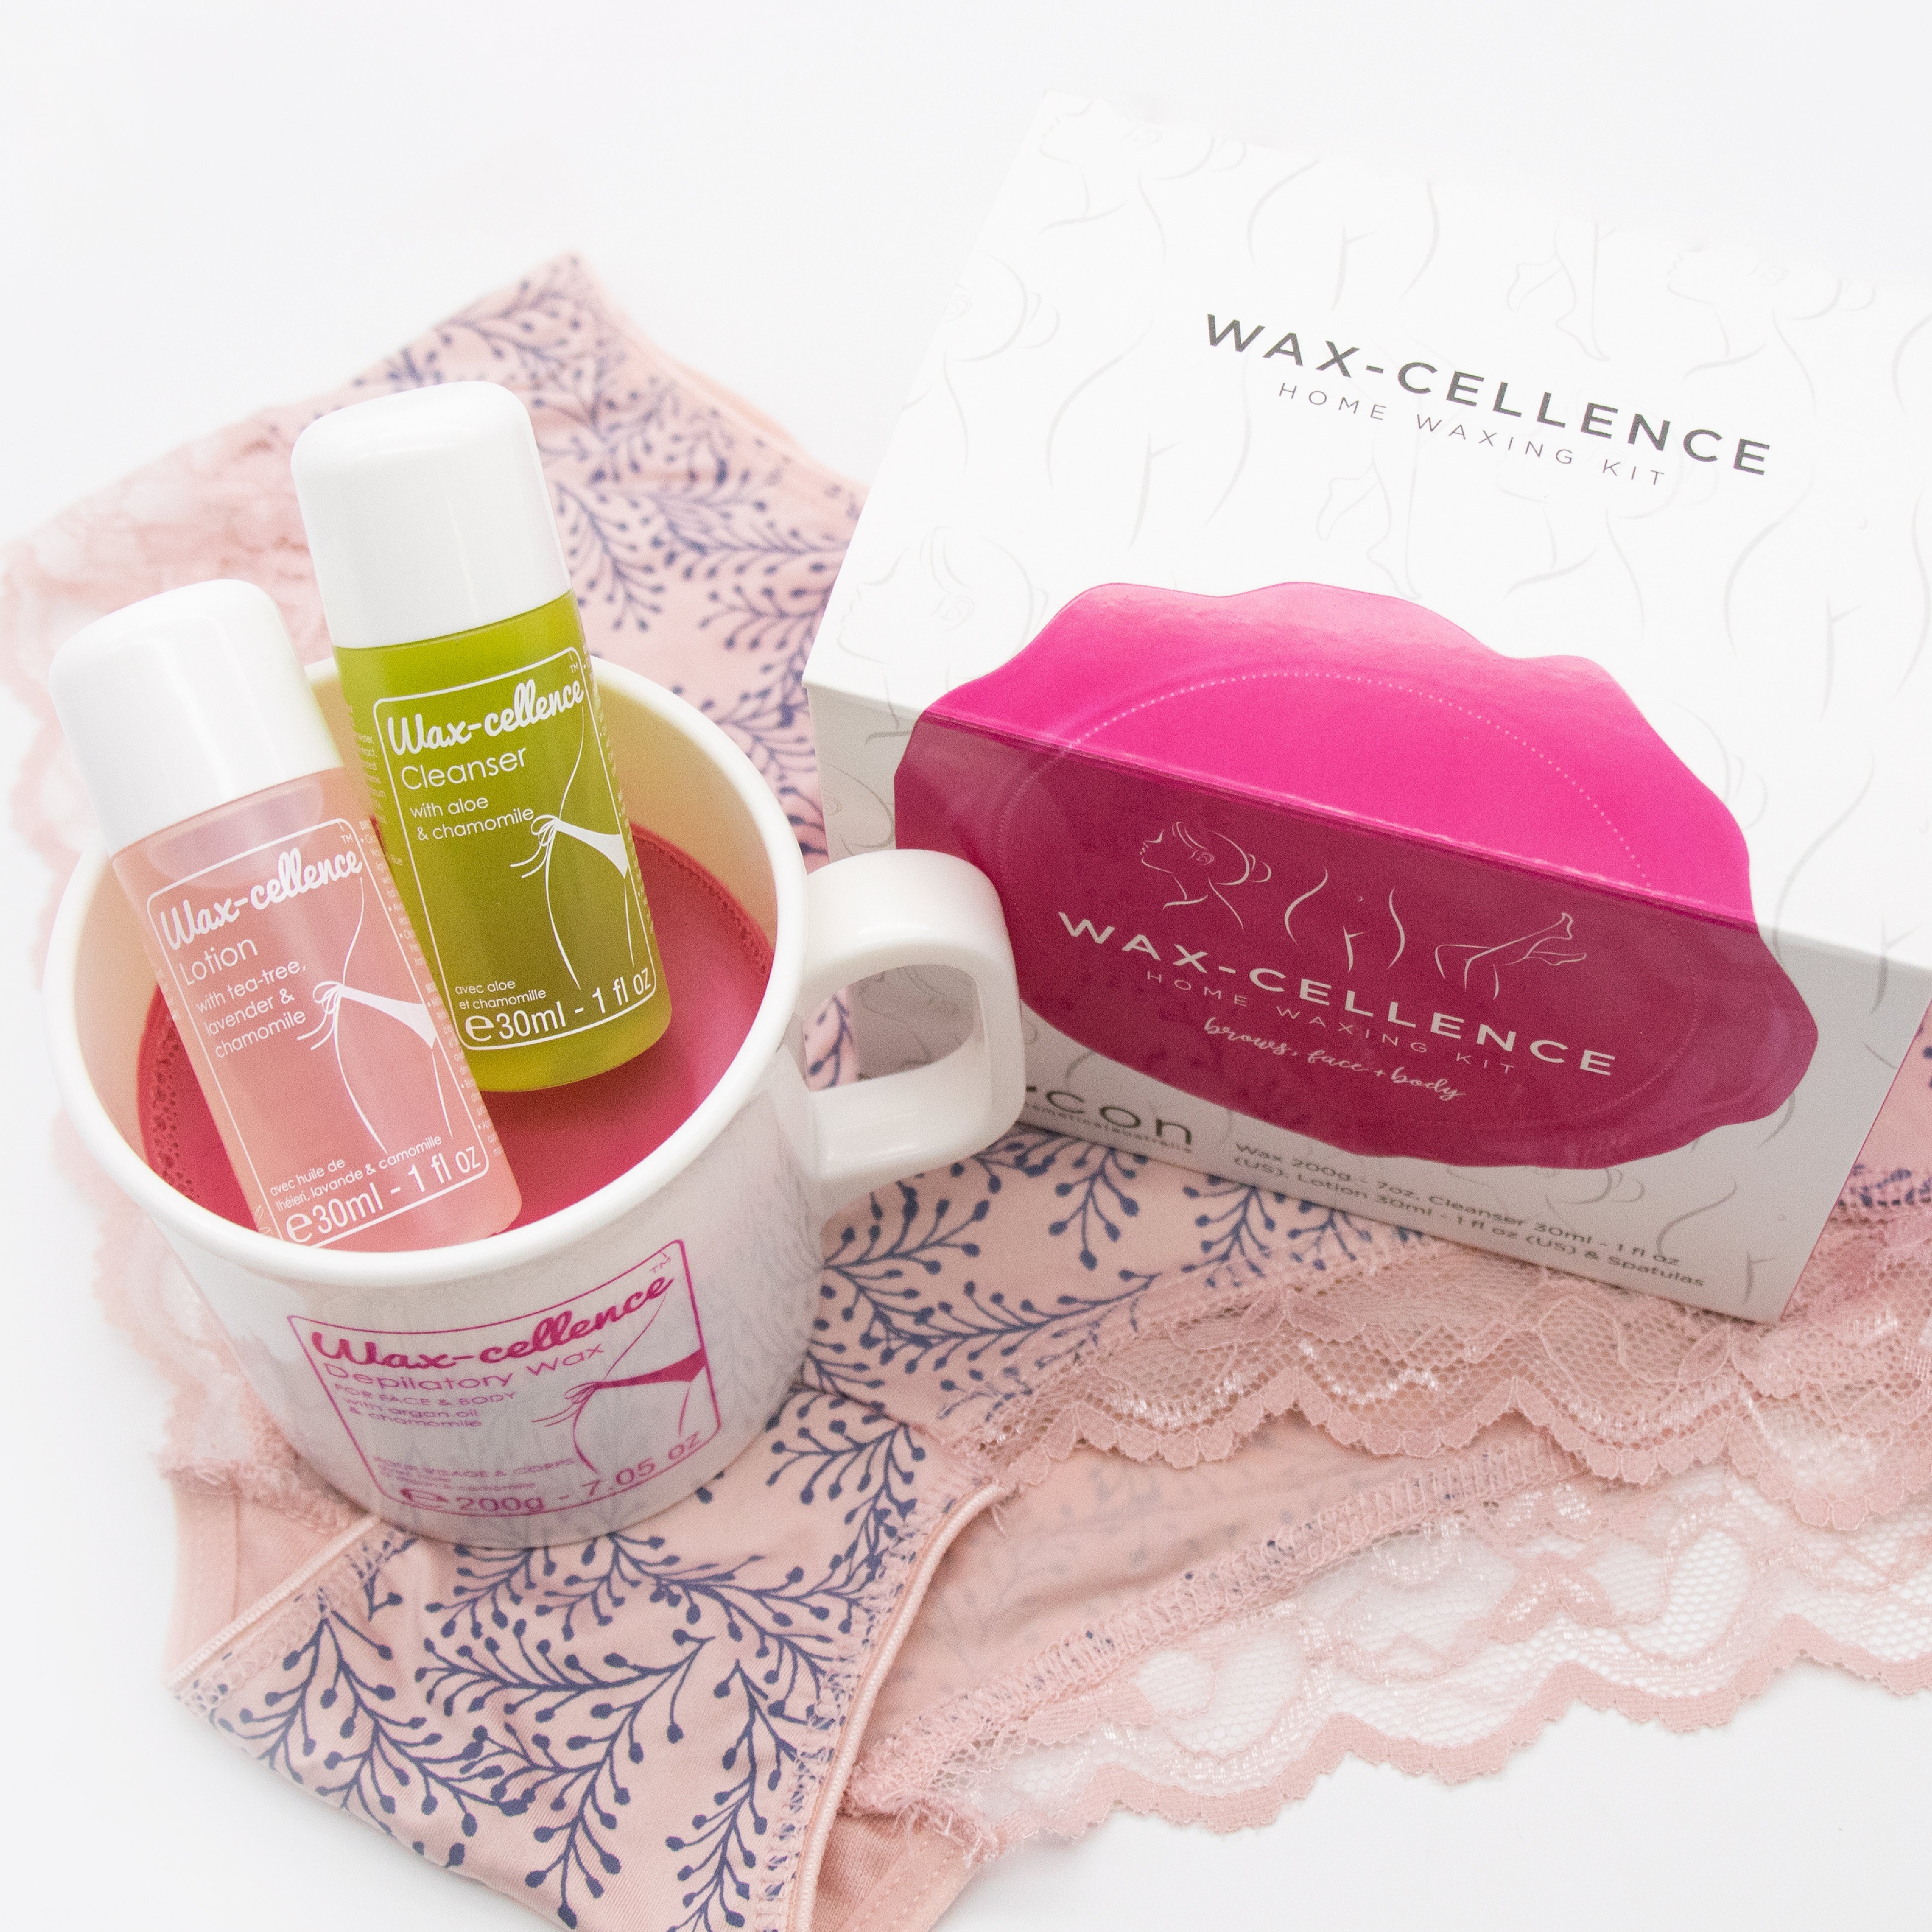 Wax-Cellence Home Waxing Kit